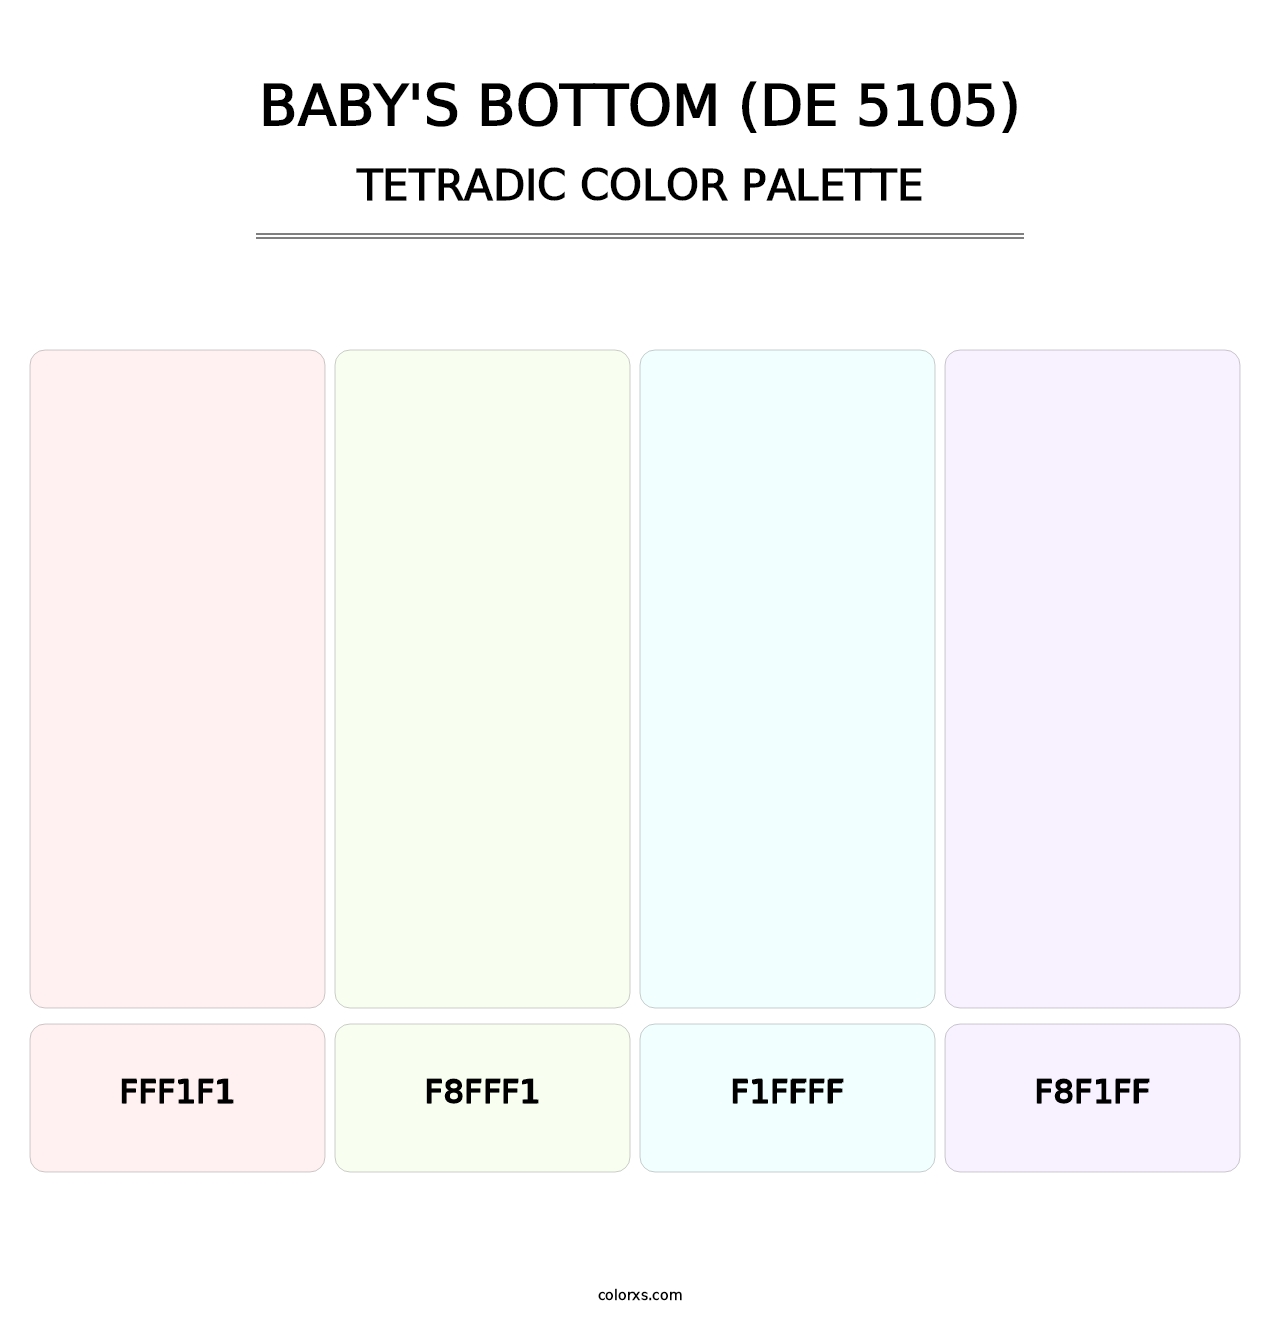 Baby's Bottom (DE 5105) - Tetradic Color Palette